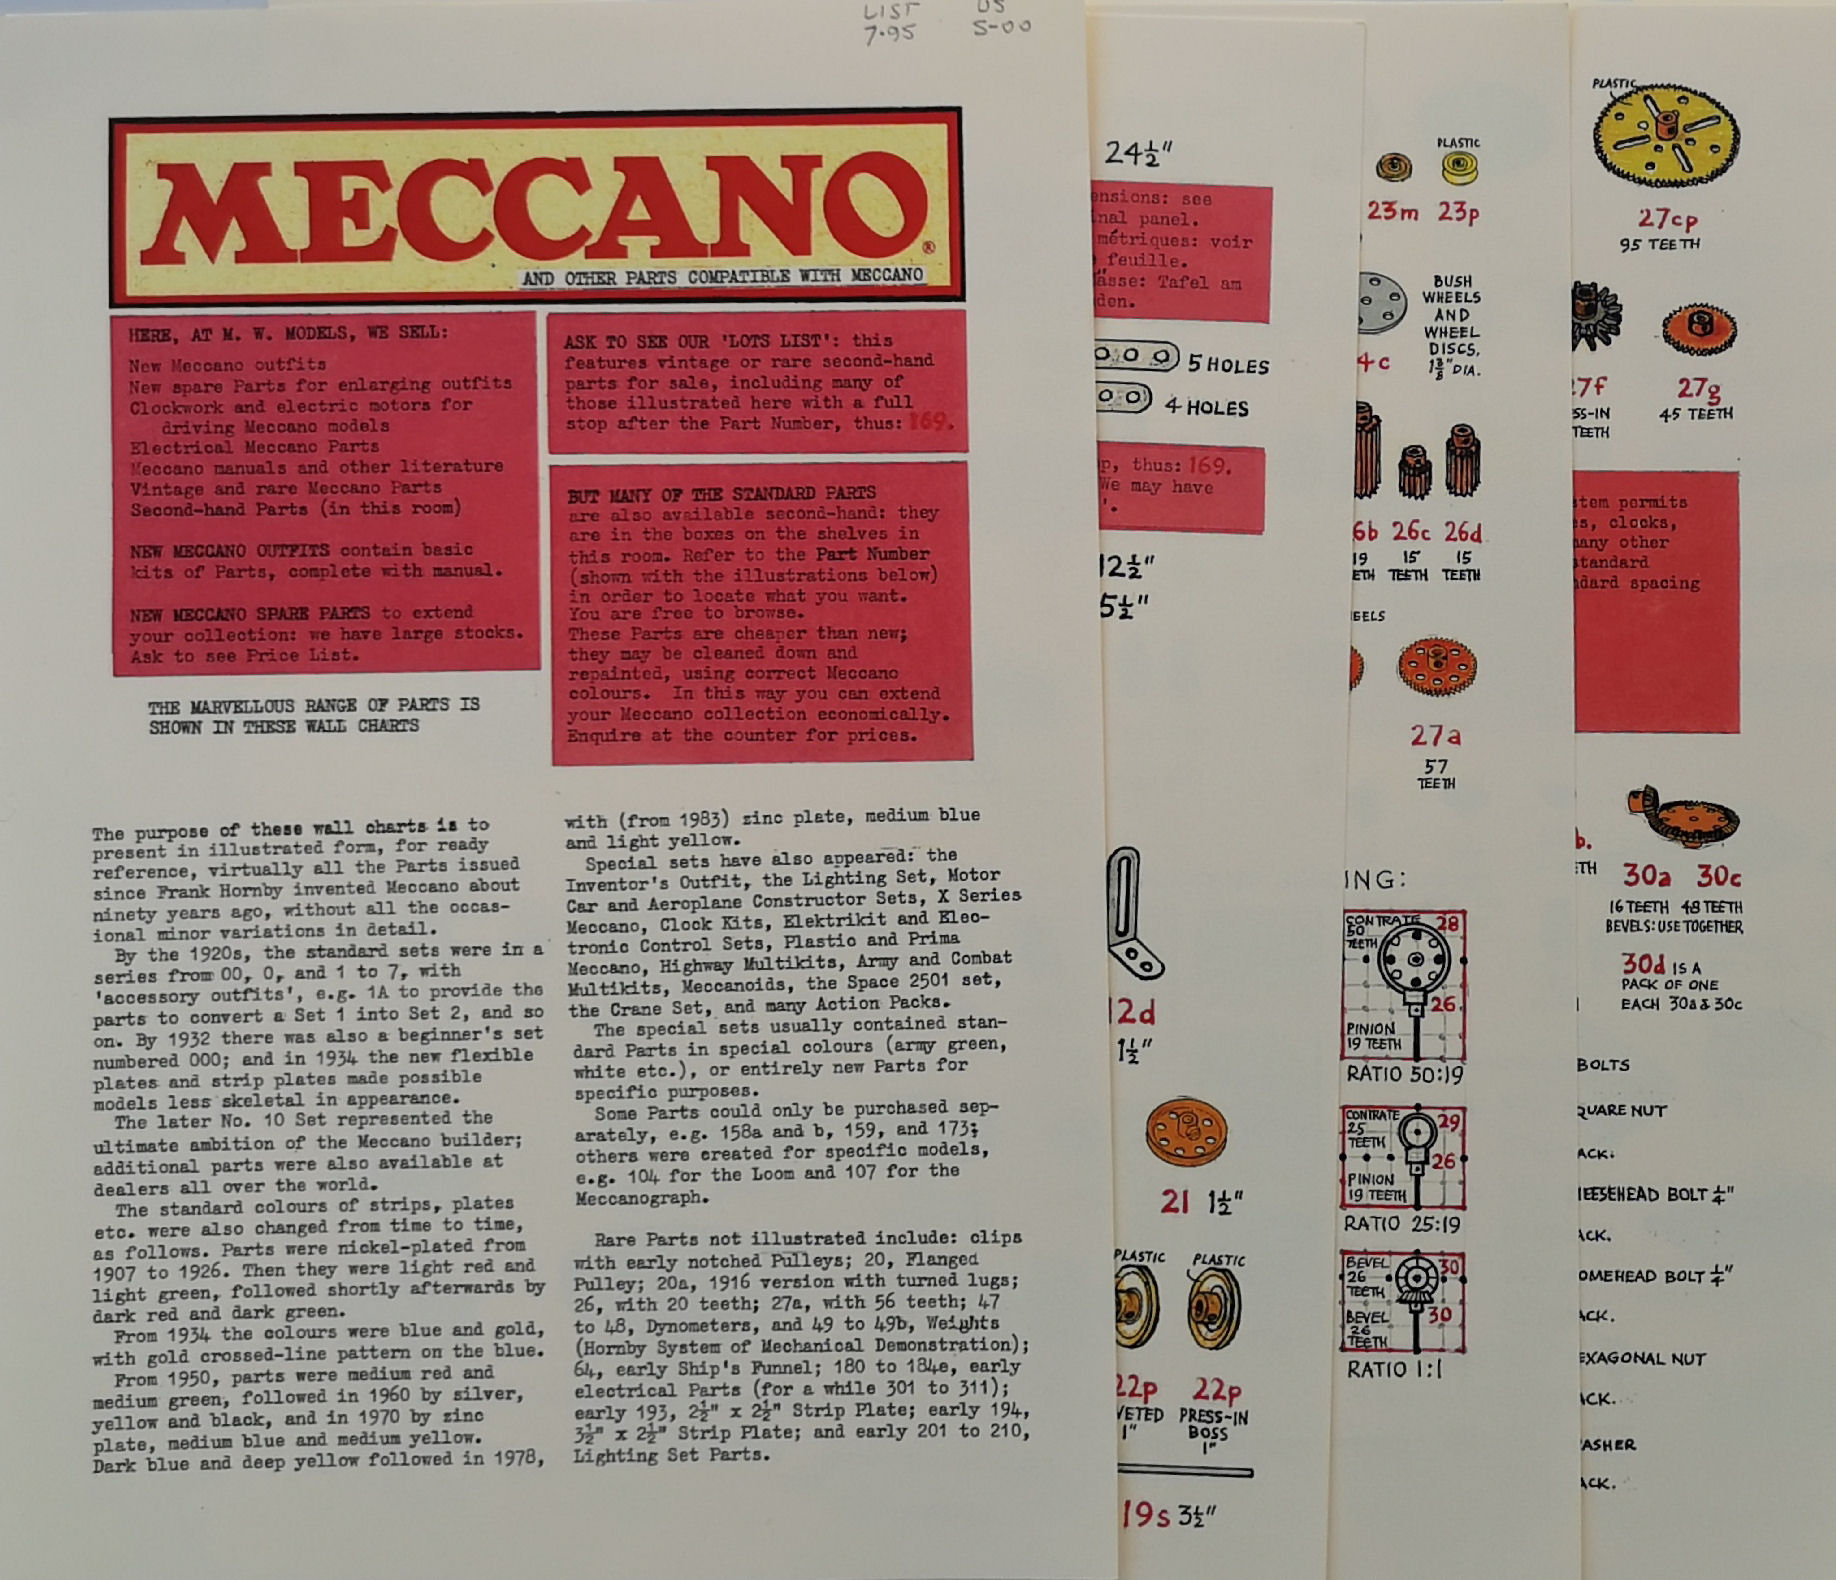 LOT 0198 - MECCANO AND PART COMPATIBLE